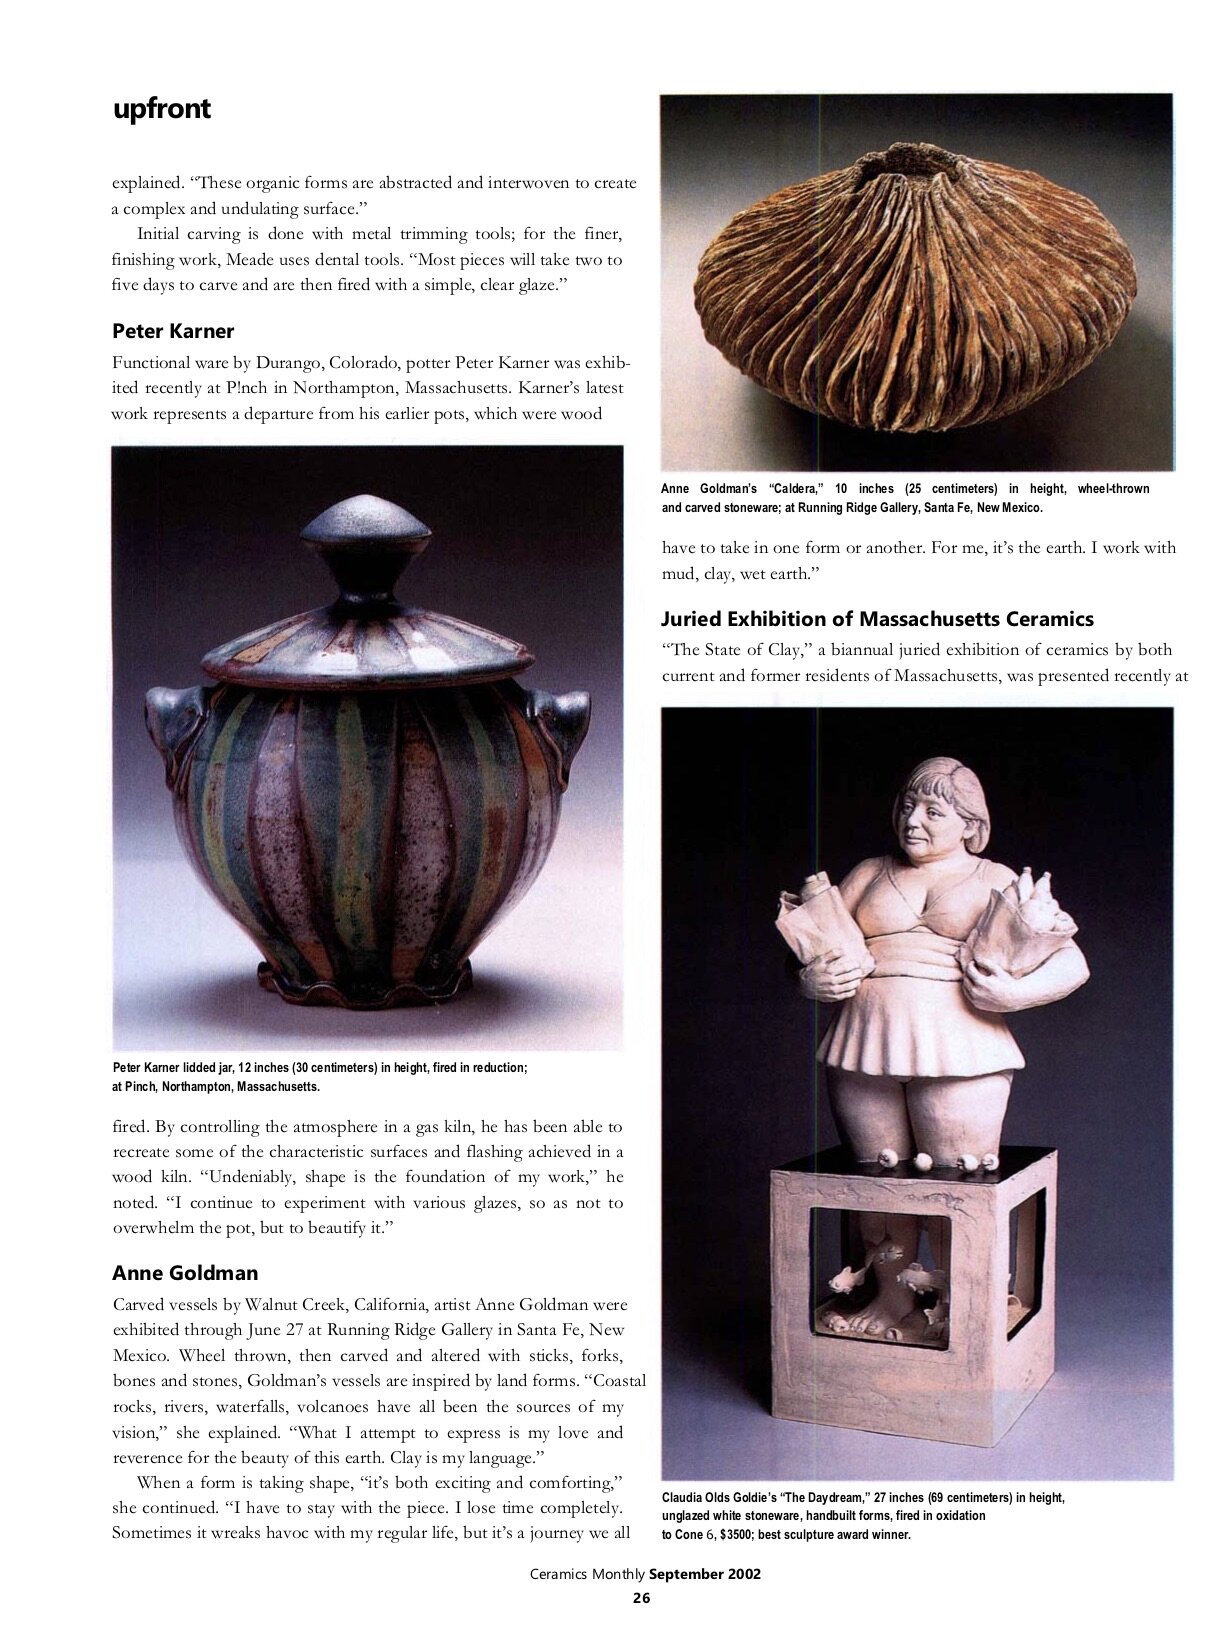 Ceramics_Monthly_sep02_cei0902d-Lynne-Meade-p25-1229x1631.jpg